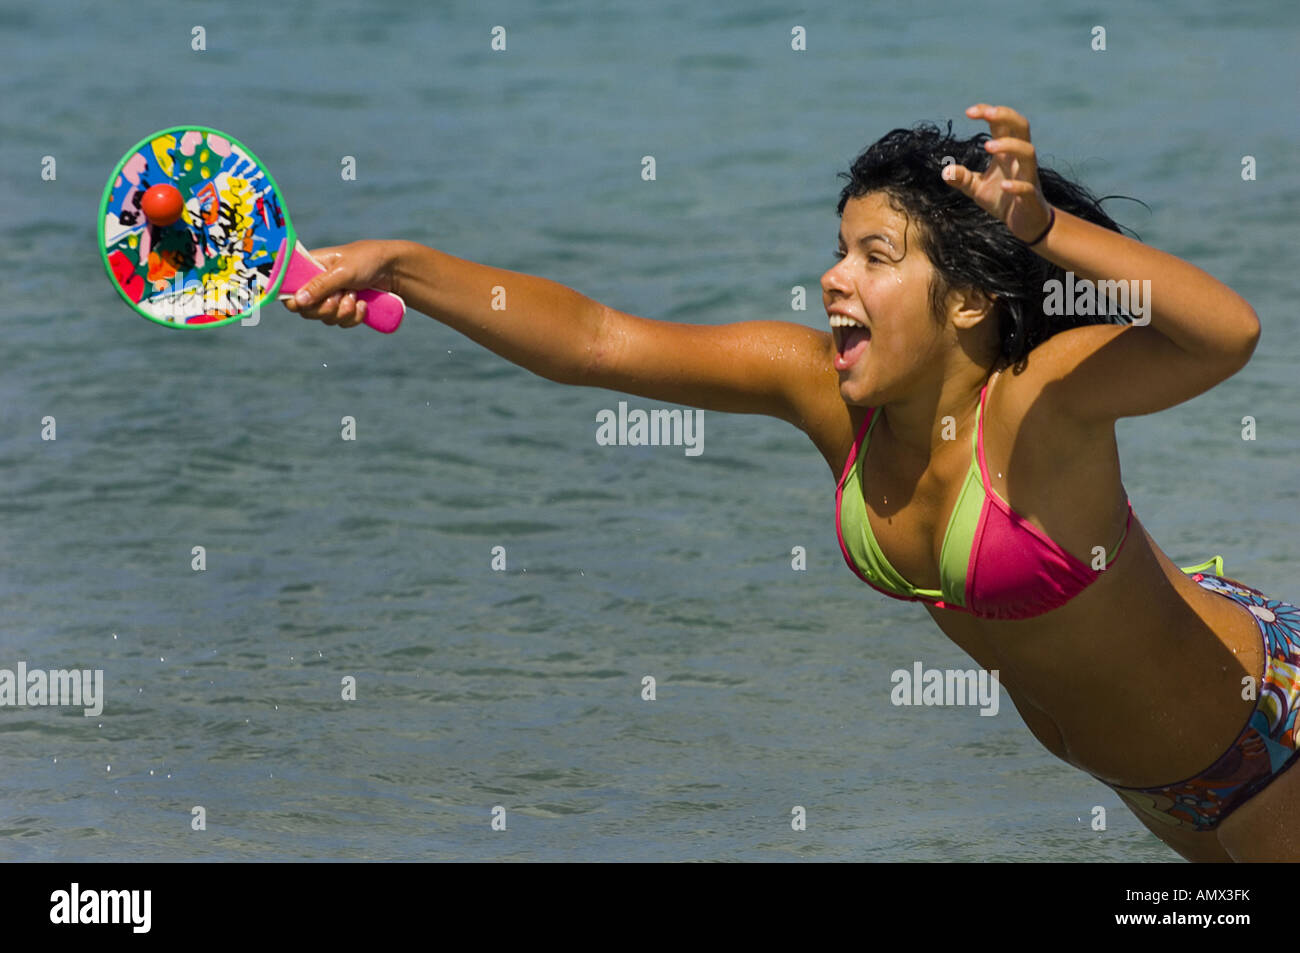 Beachball bikini -Fotos und -Bildmaterial in hoher Auflösung – Alamy